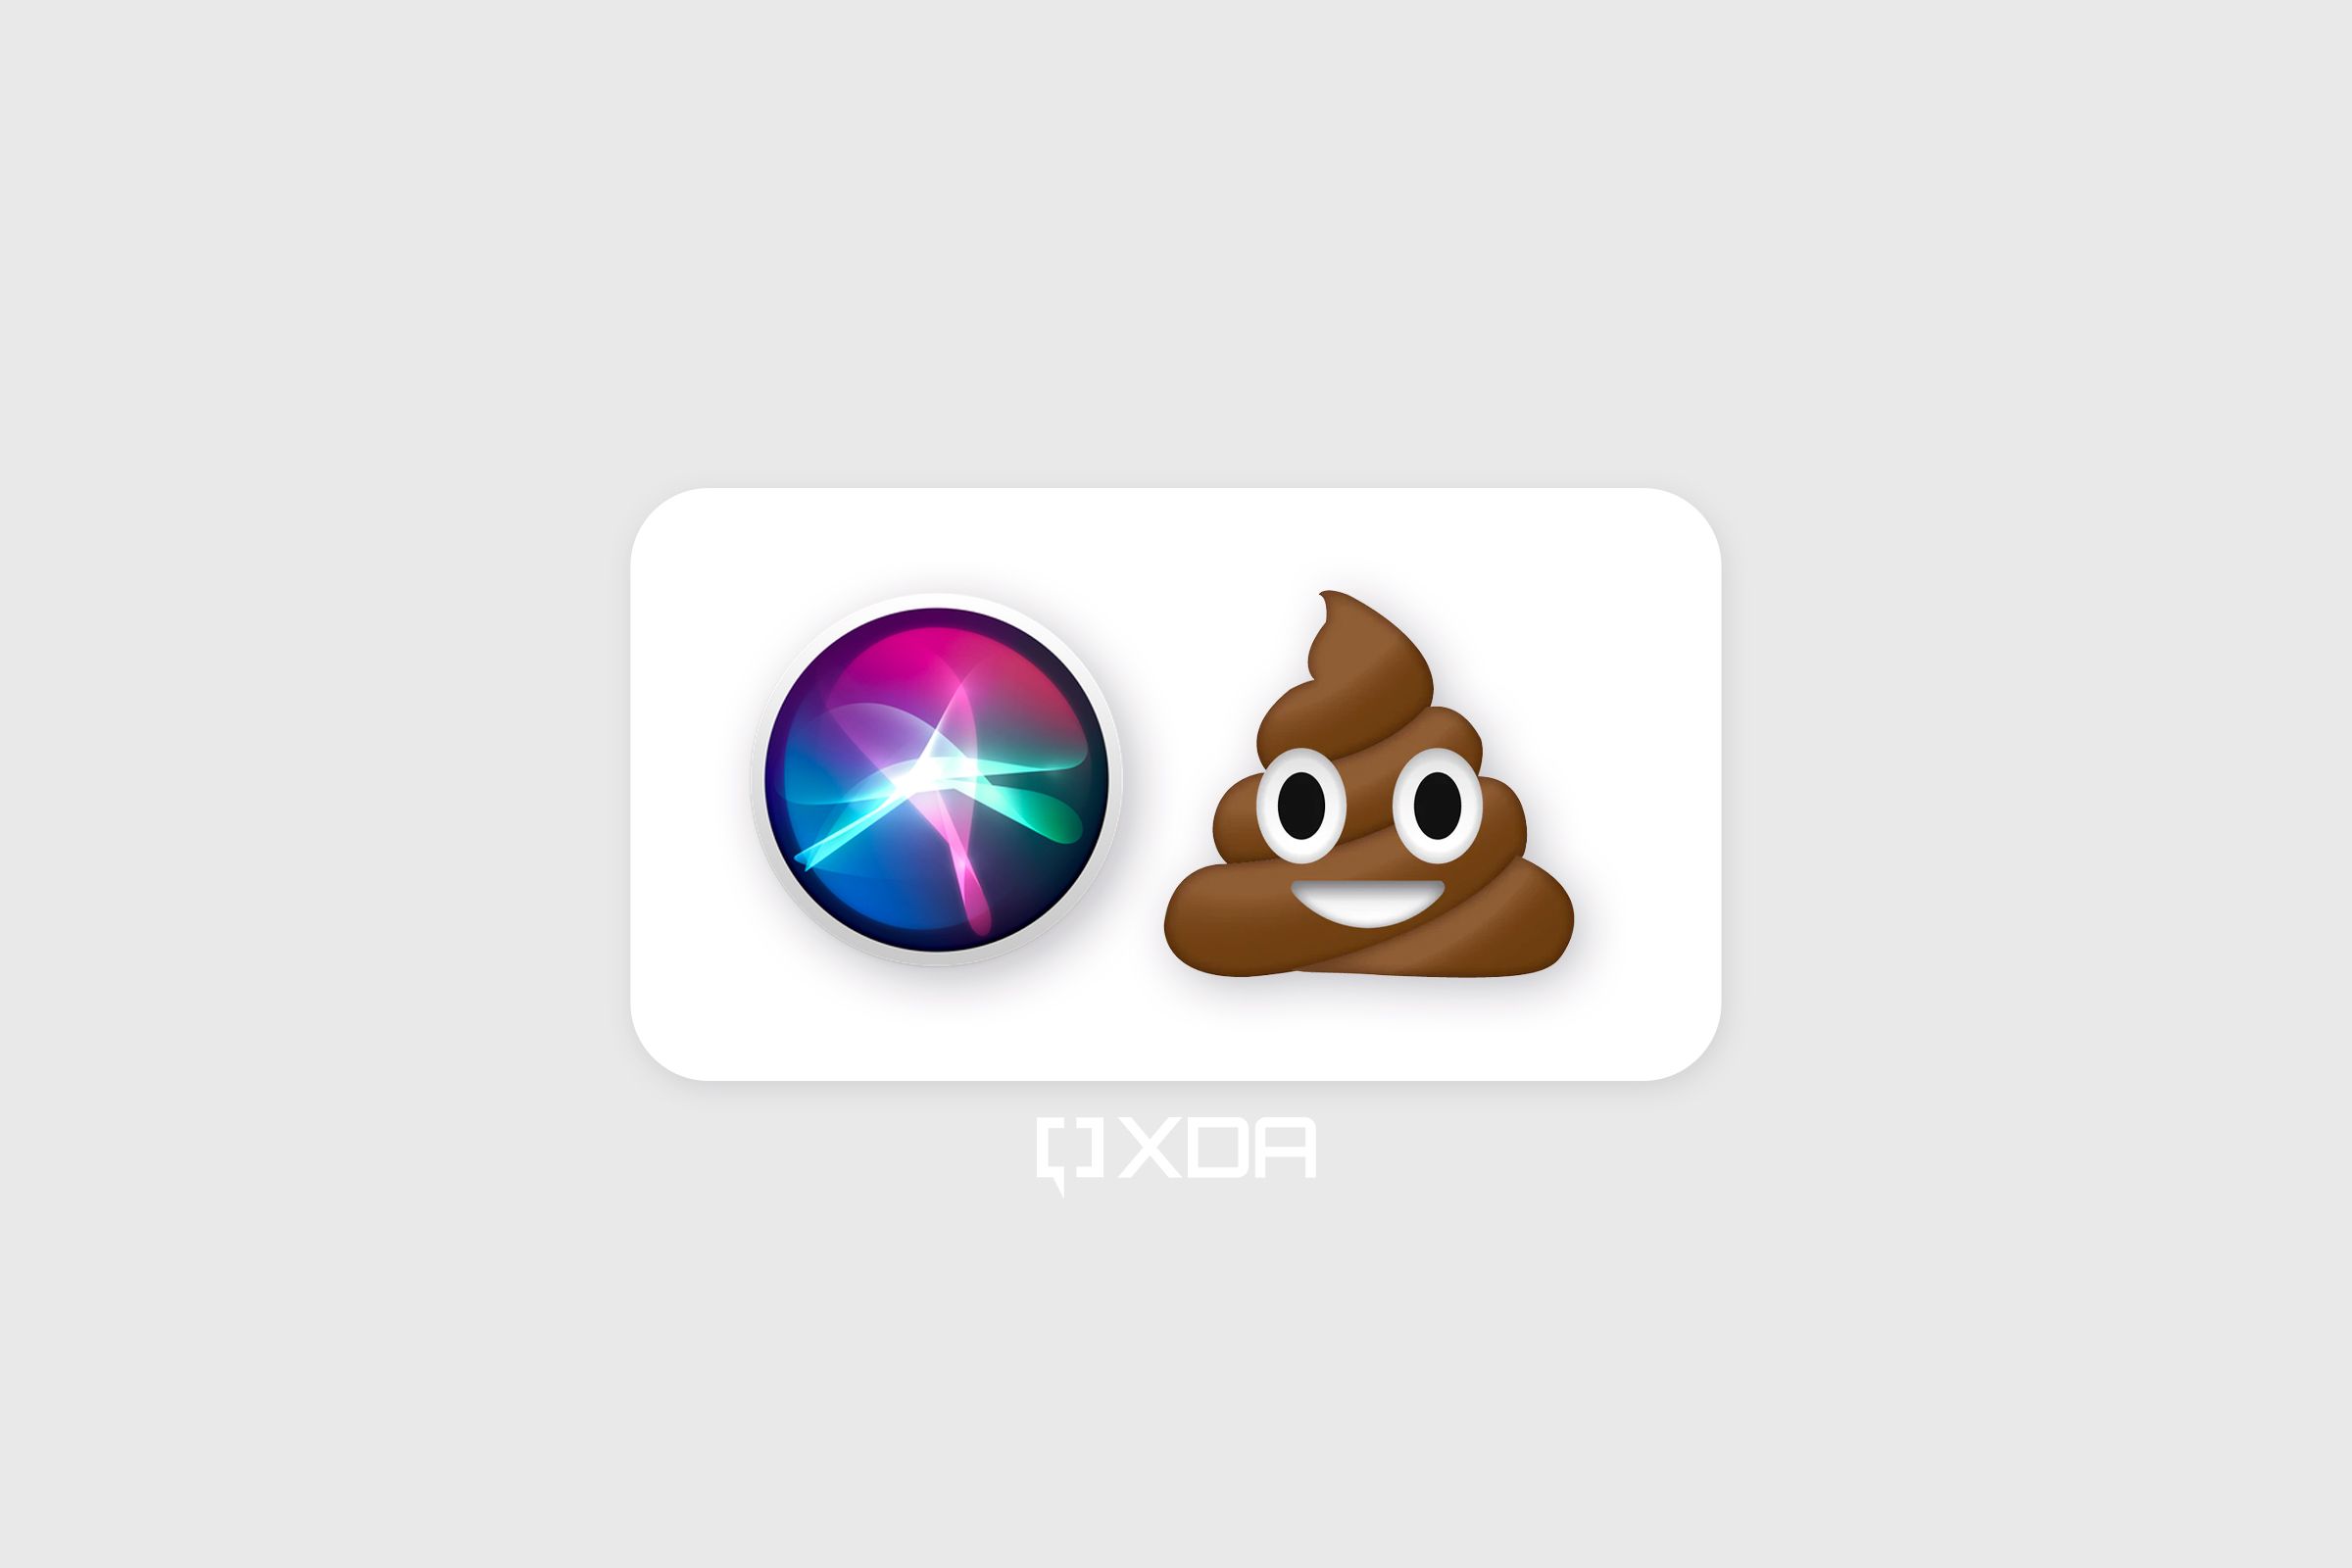 siri icon next to poop emoji